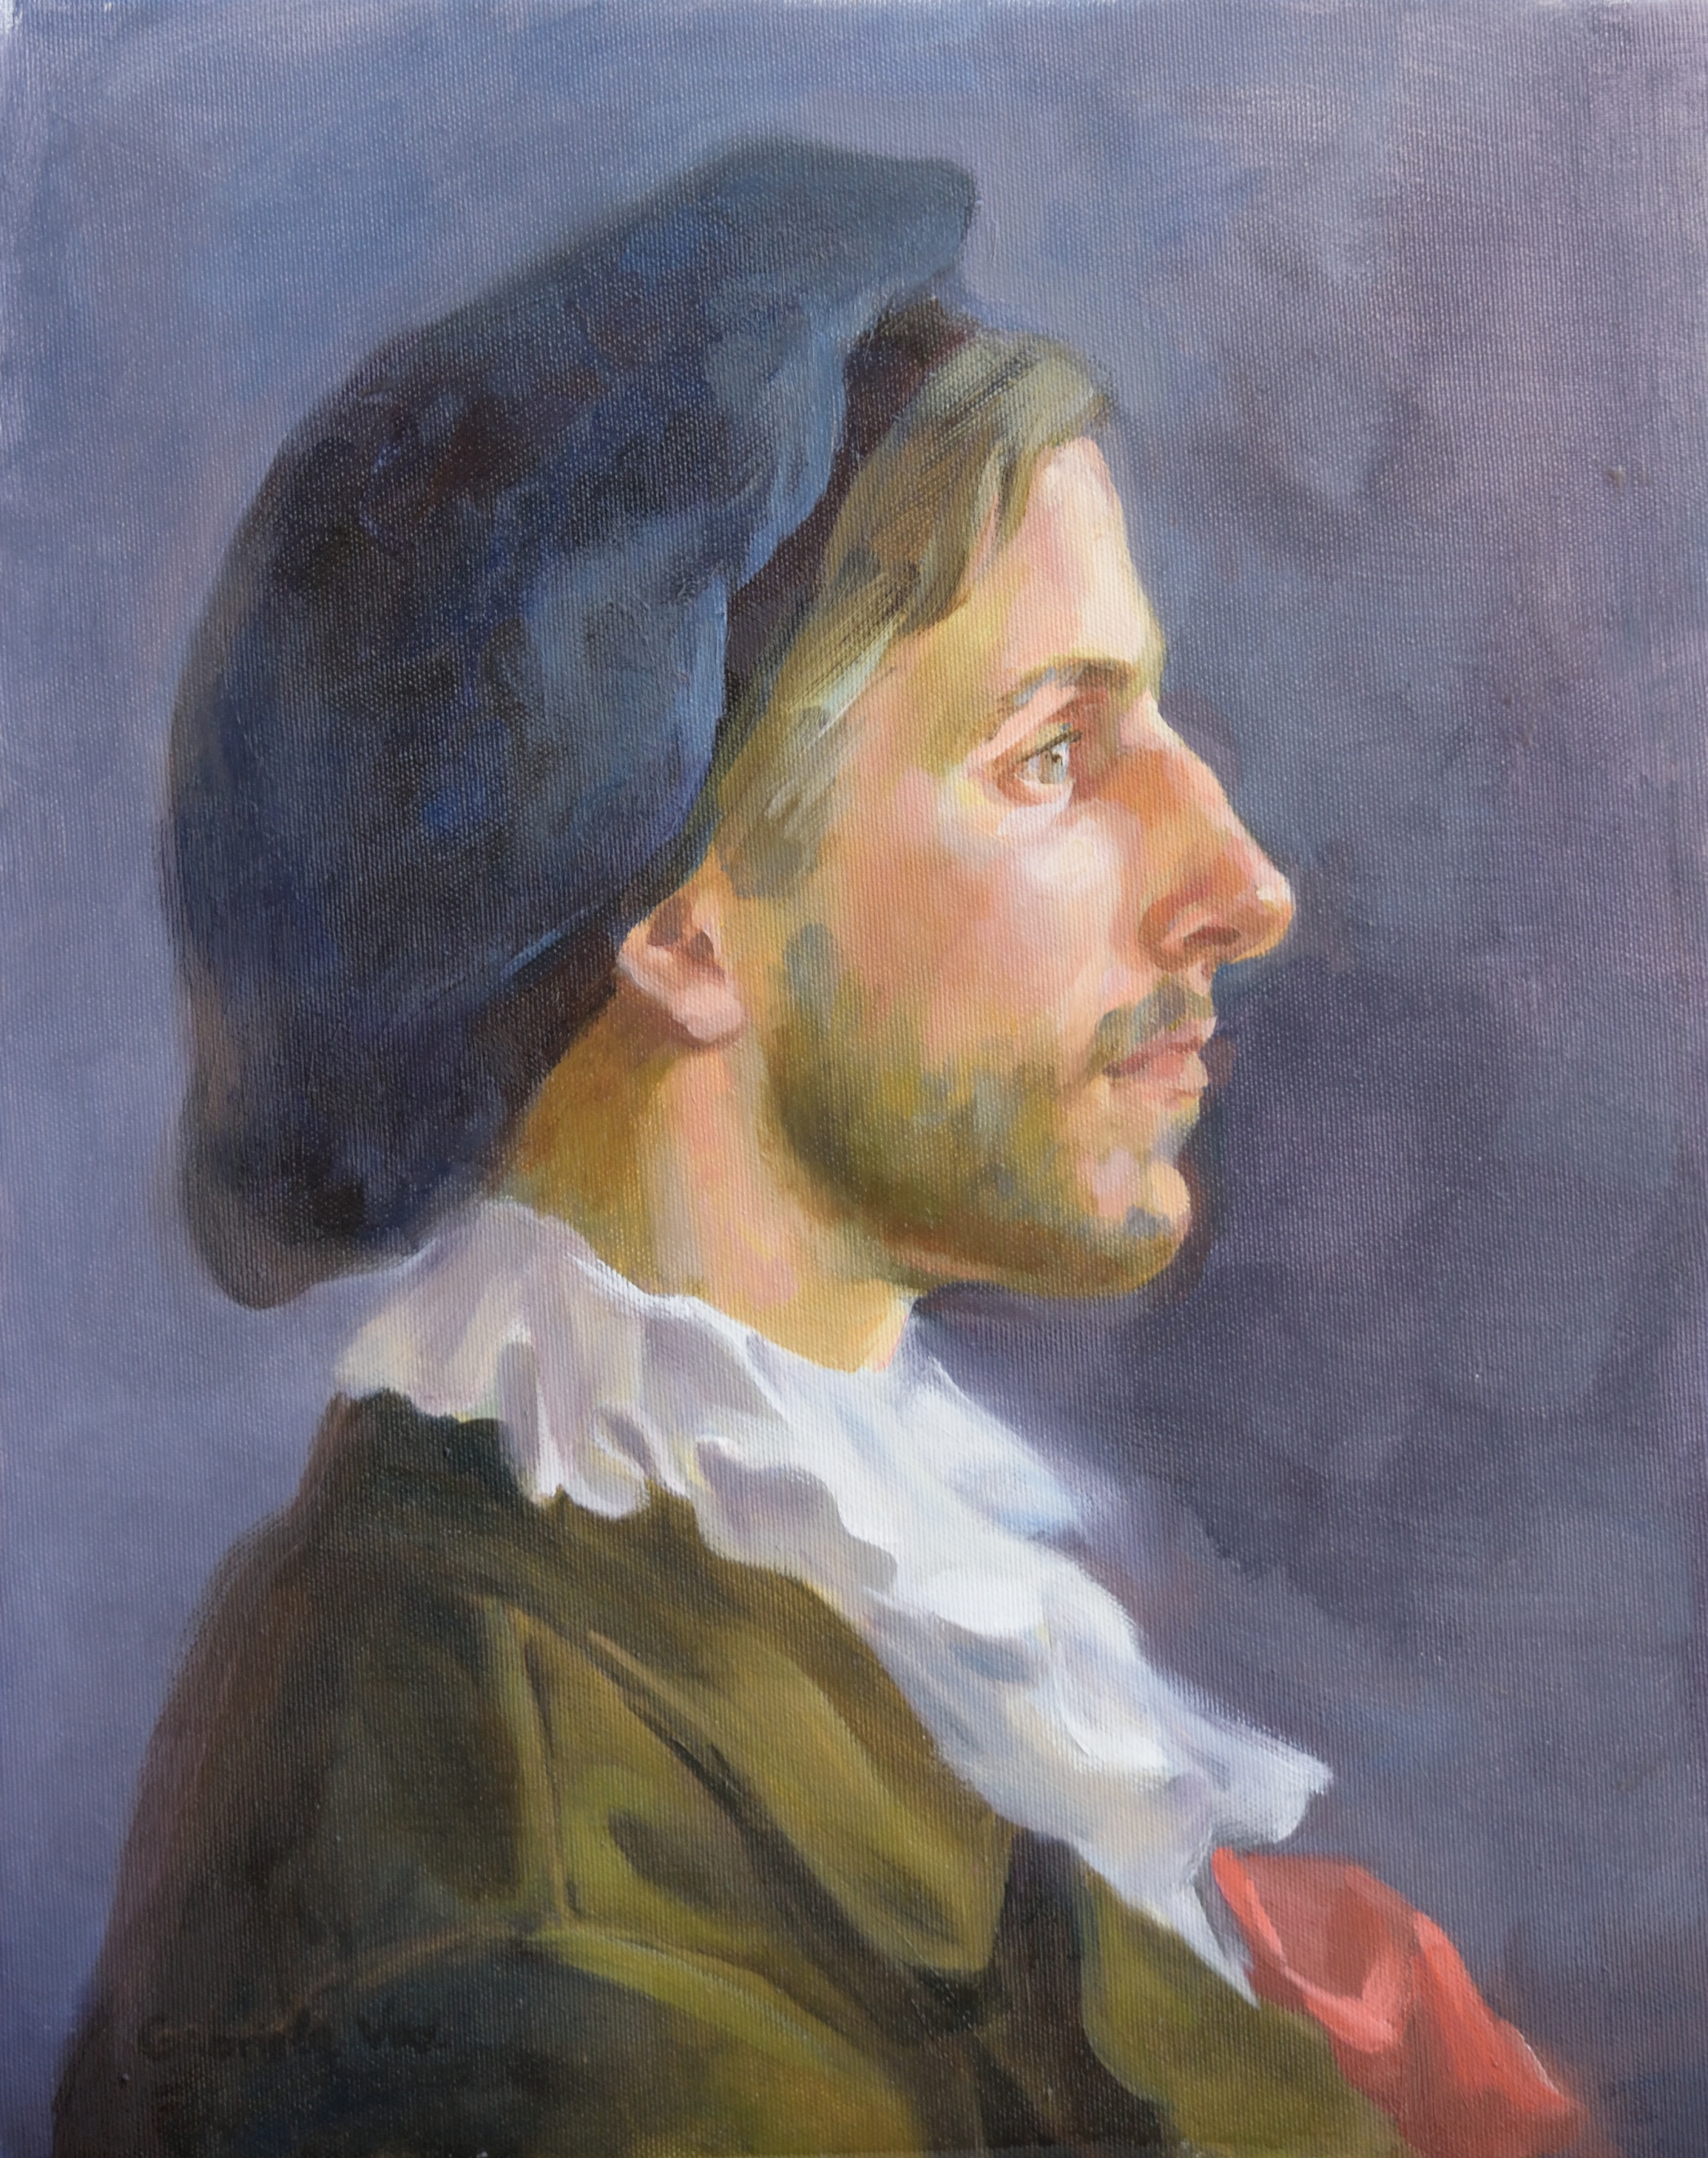 The royal painter, oil on canvas, 50 x 40 cm, 2017